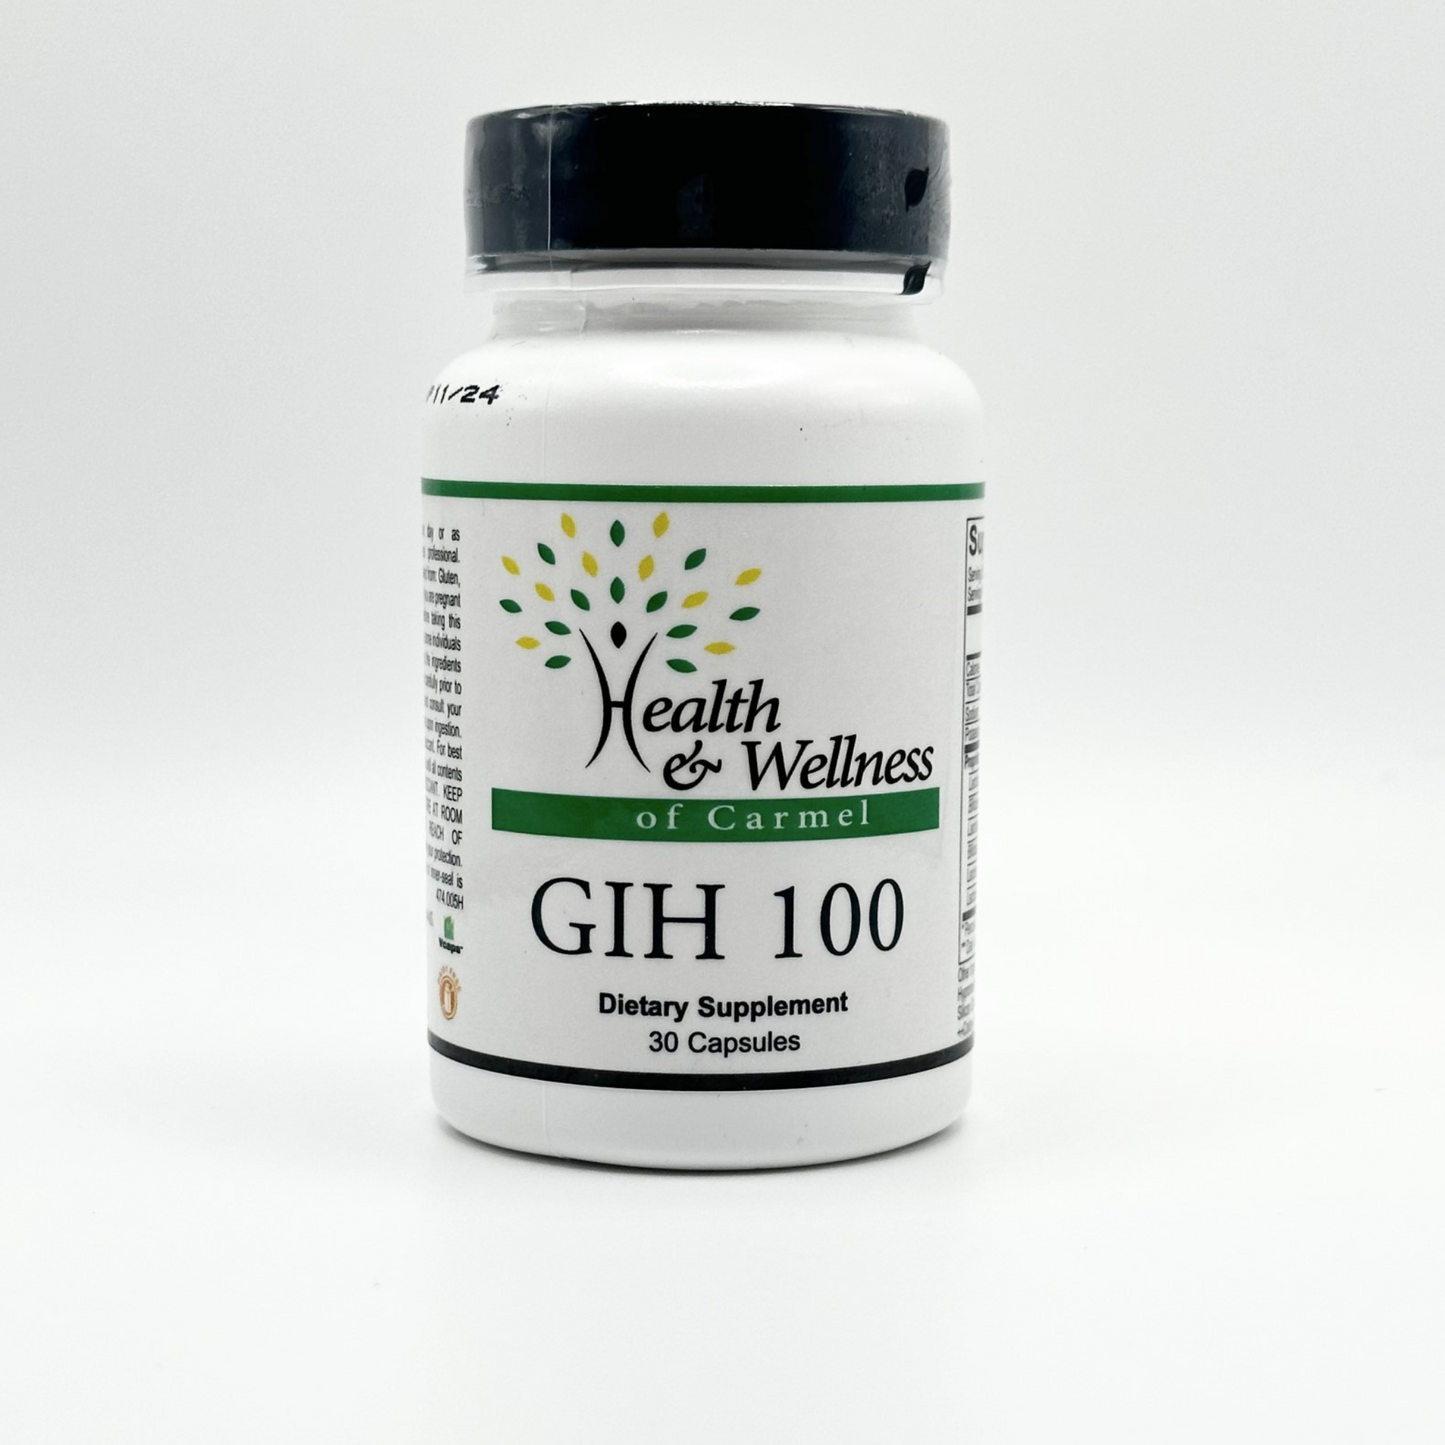 (GIH-100) 30ct